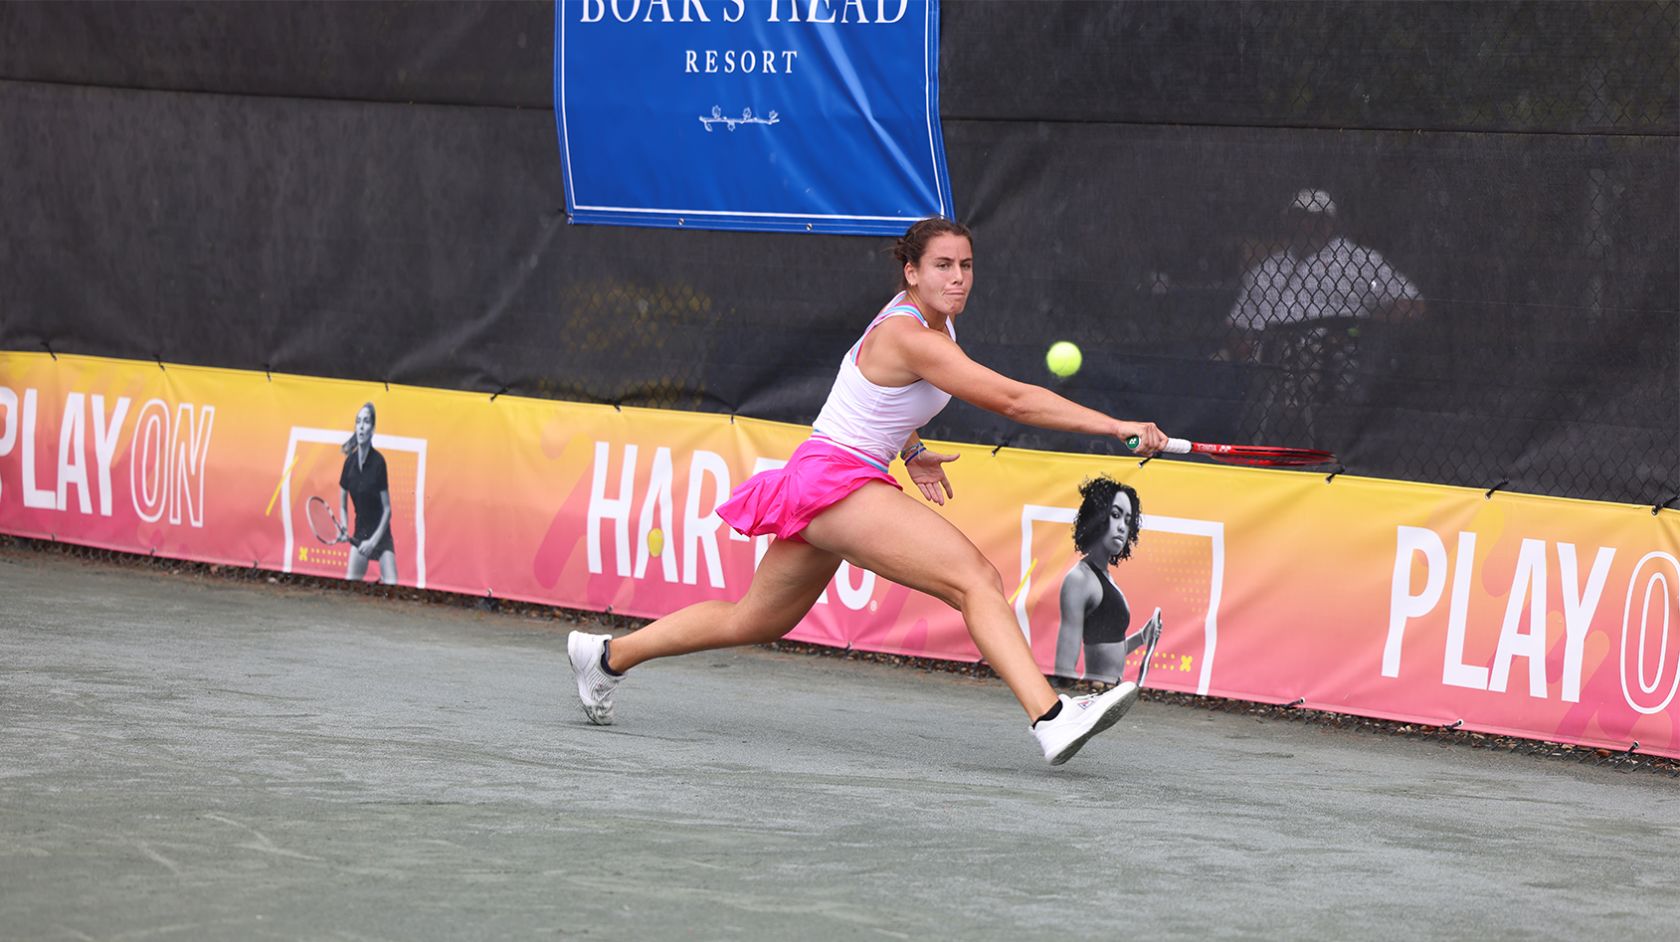 A Woman Playing Tennis